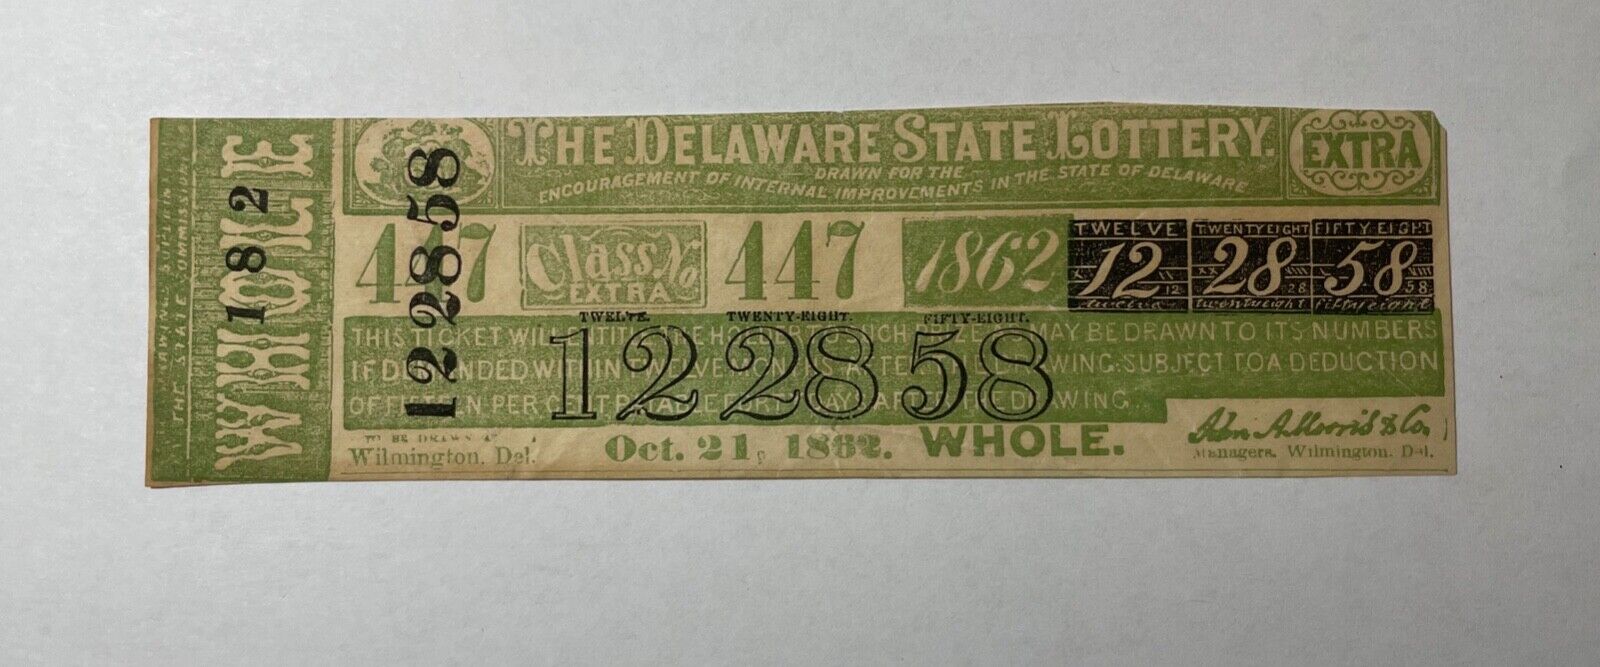 rare antique original Oct 21st 1862 Delaware United states lottery ticket stub